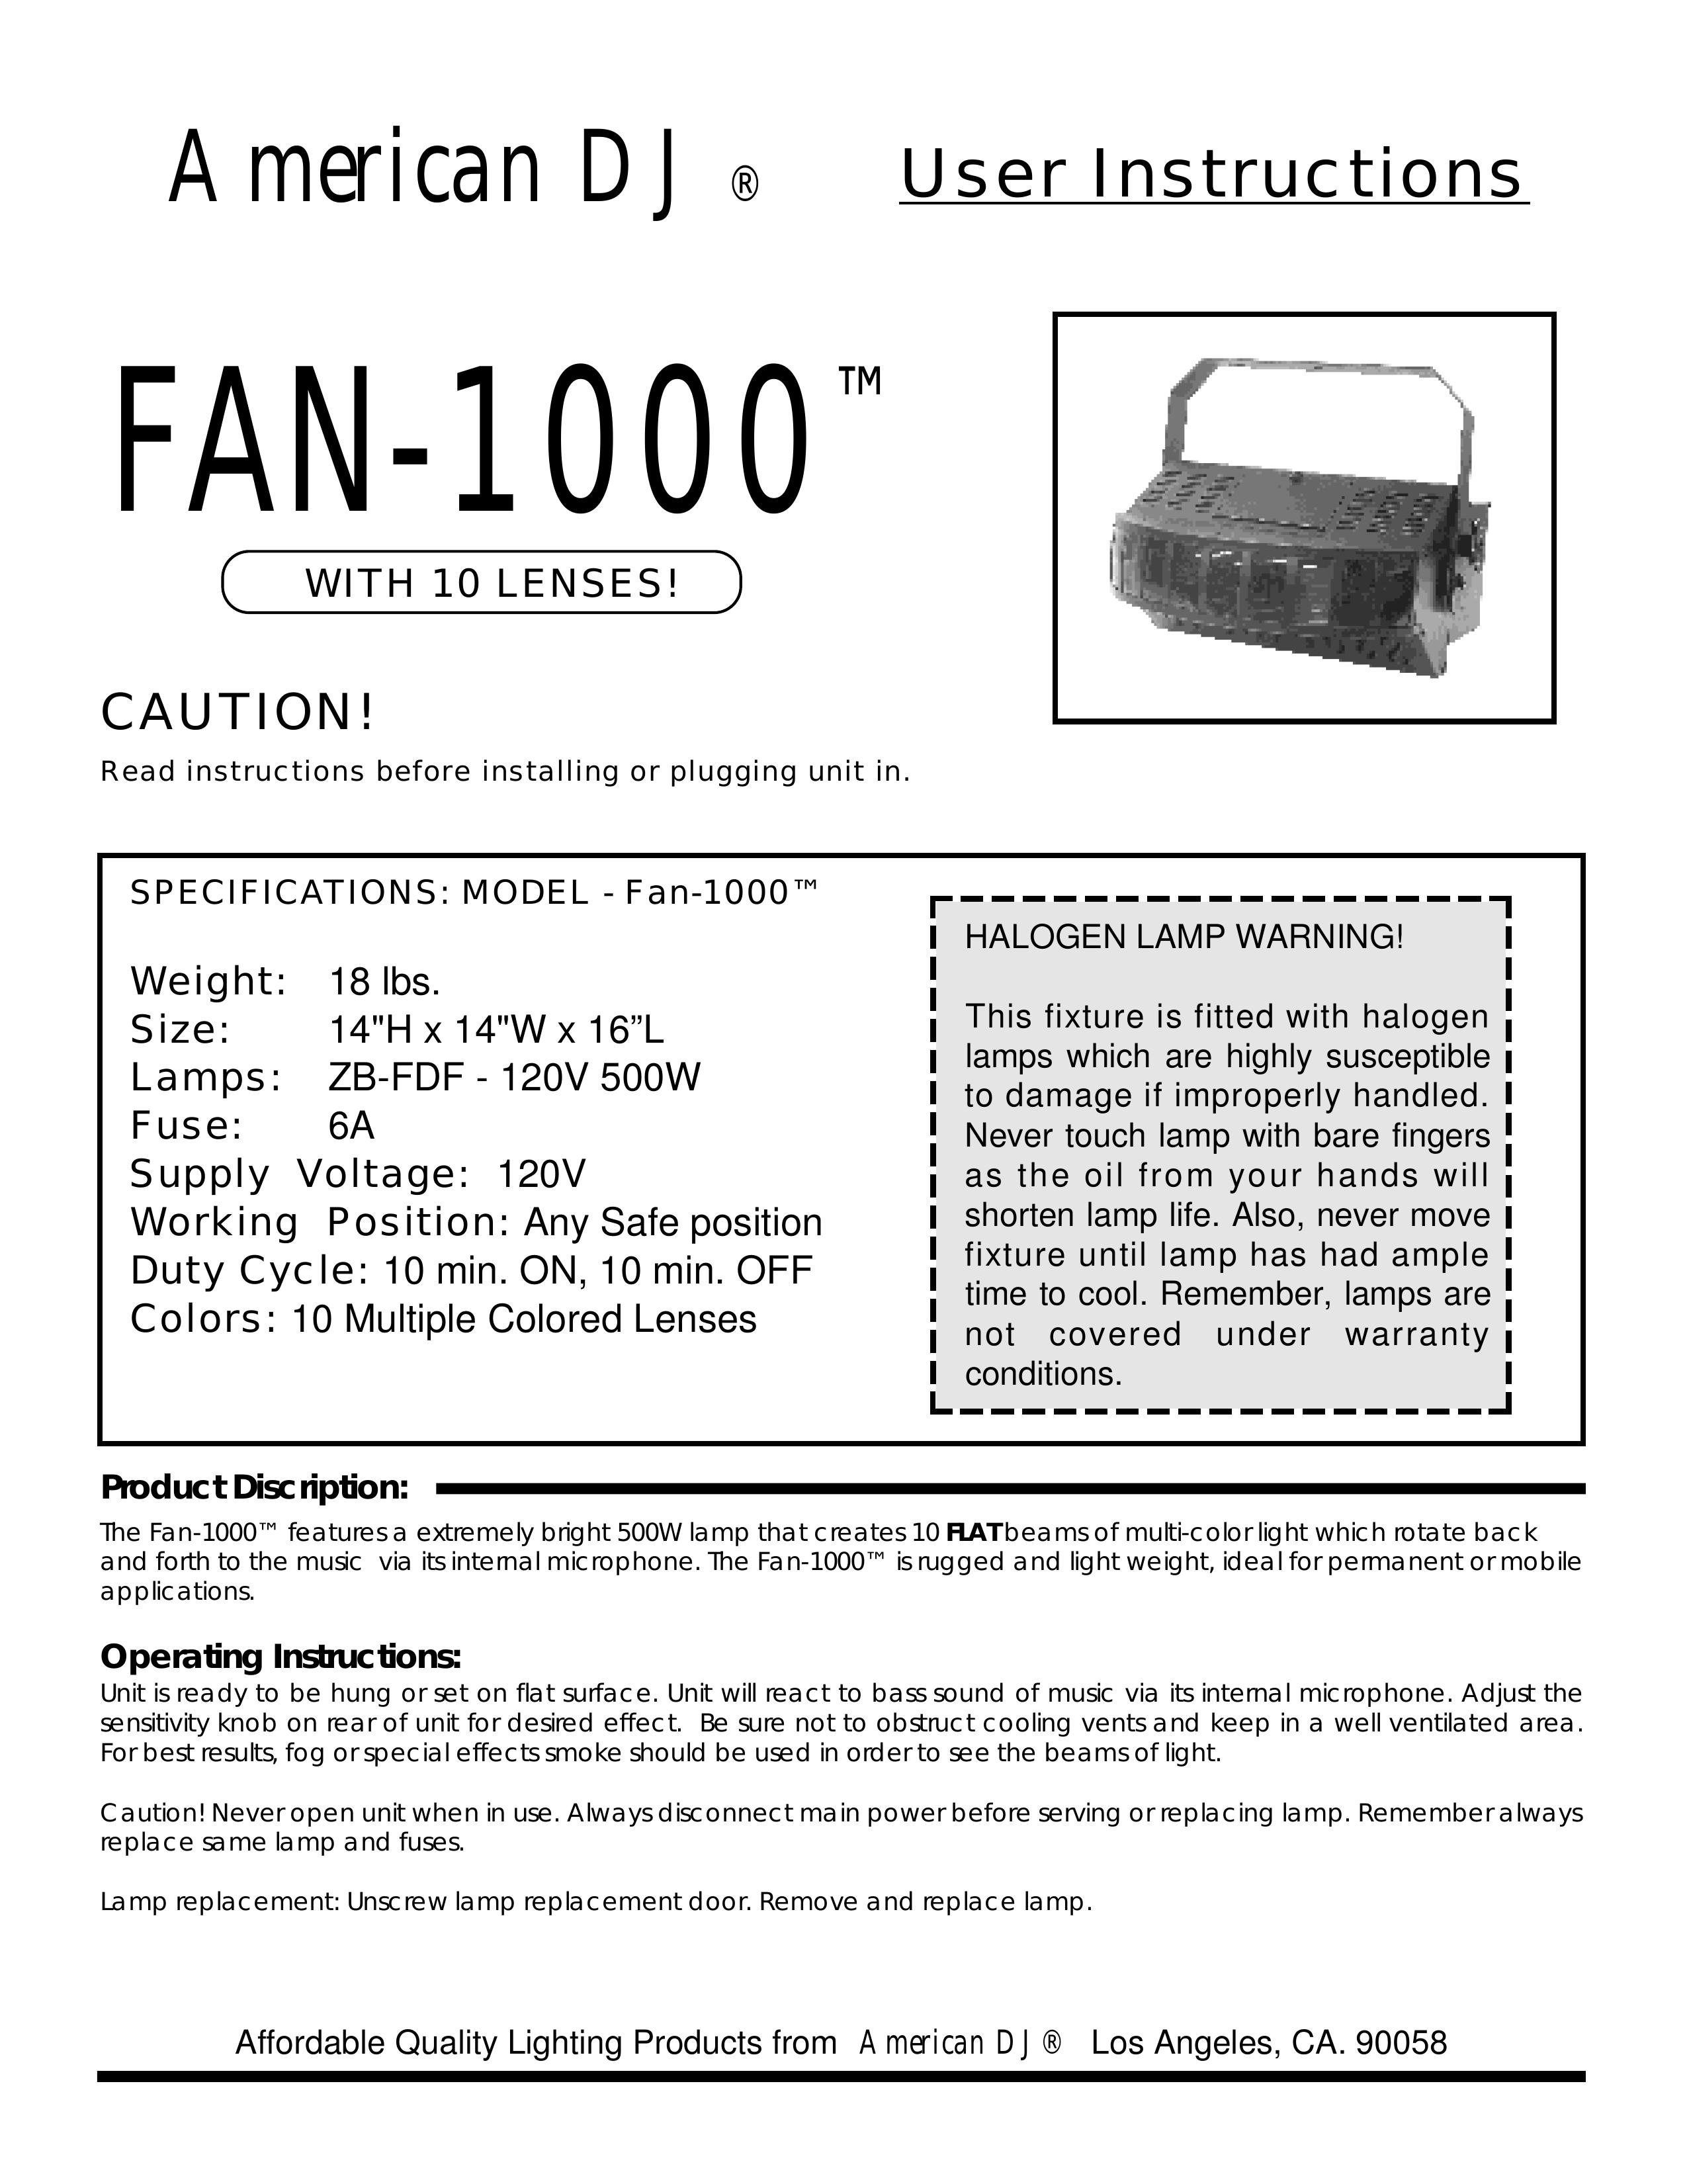 American DJ Fan-1000 DJ Equipment User Manual (Page 1)